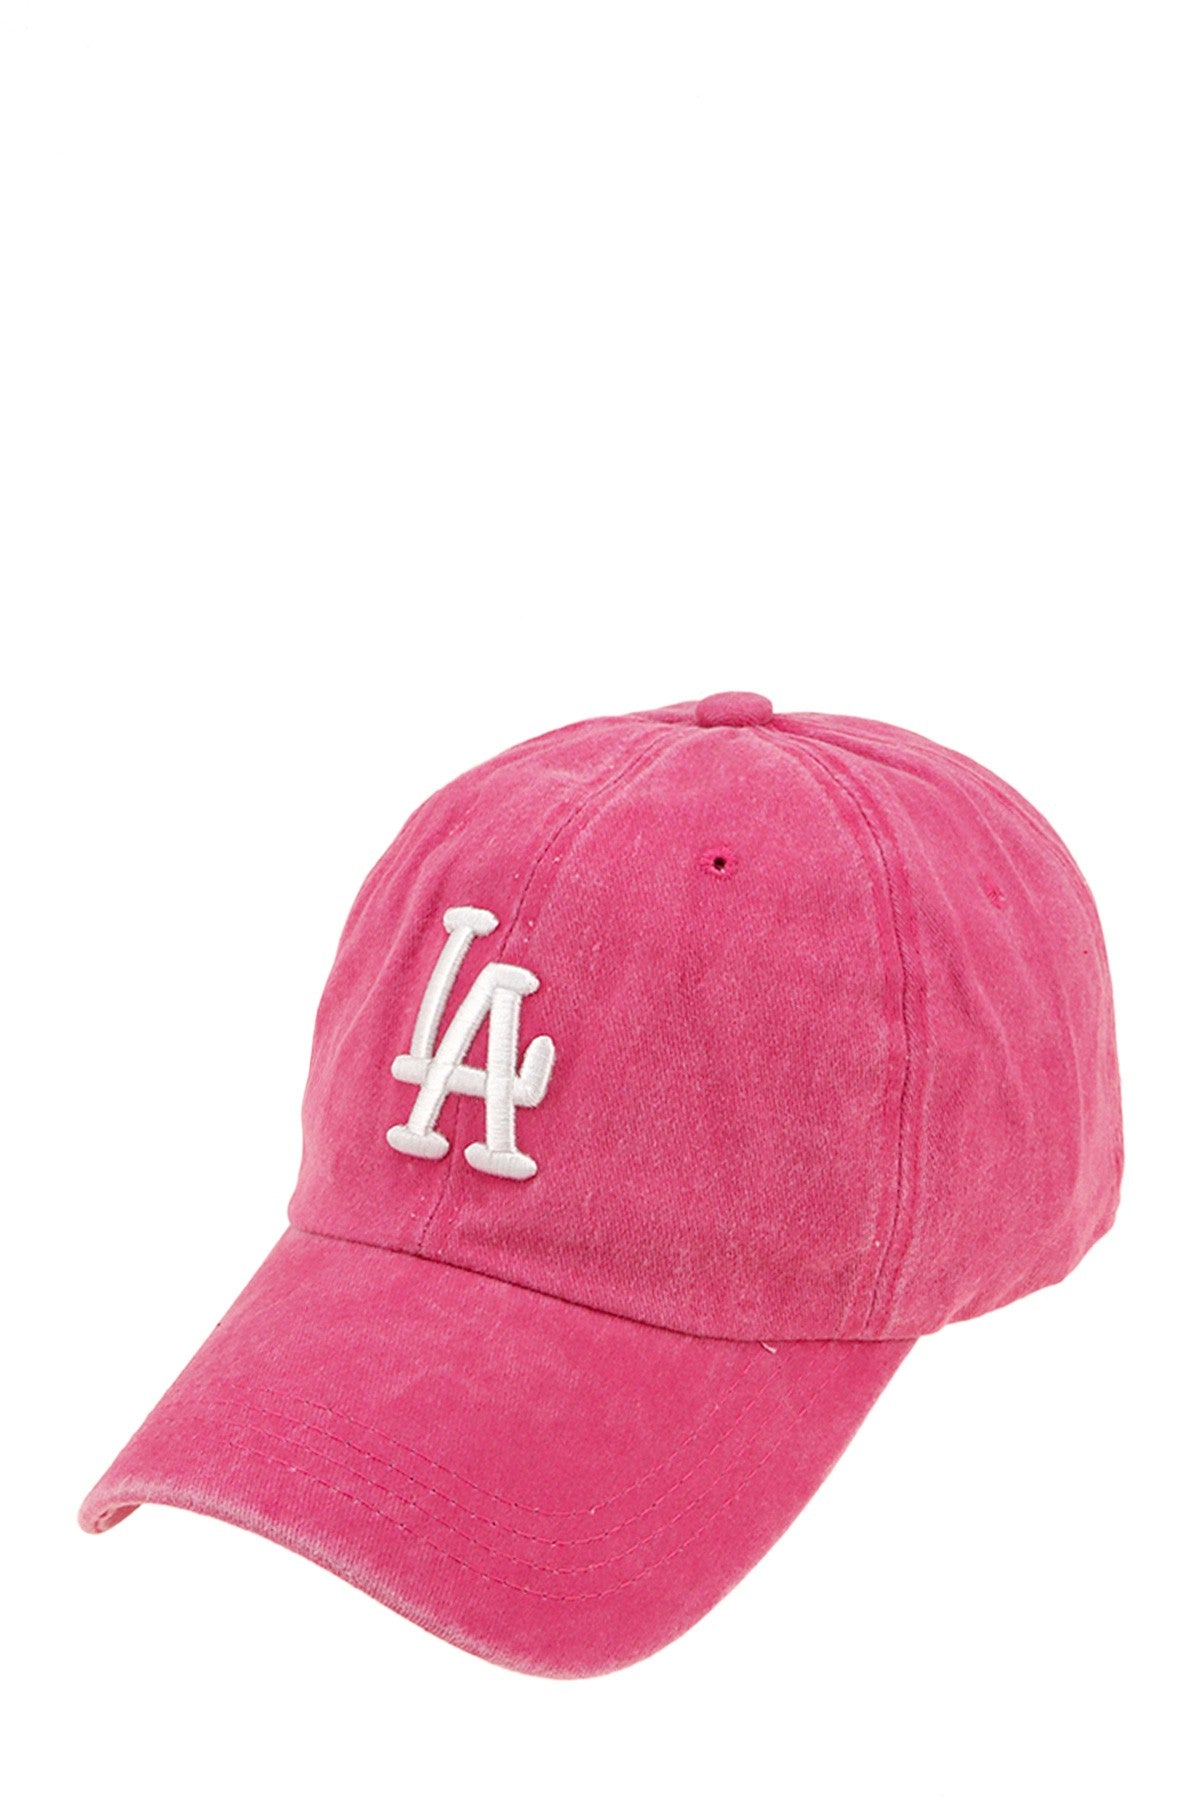 LA Baseball Hat, Pink